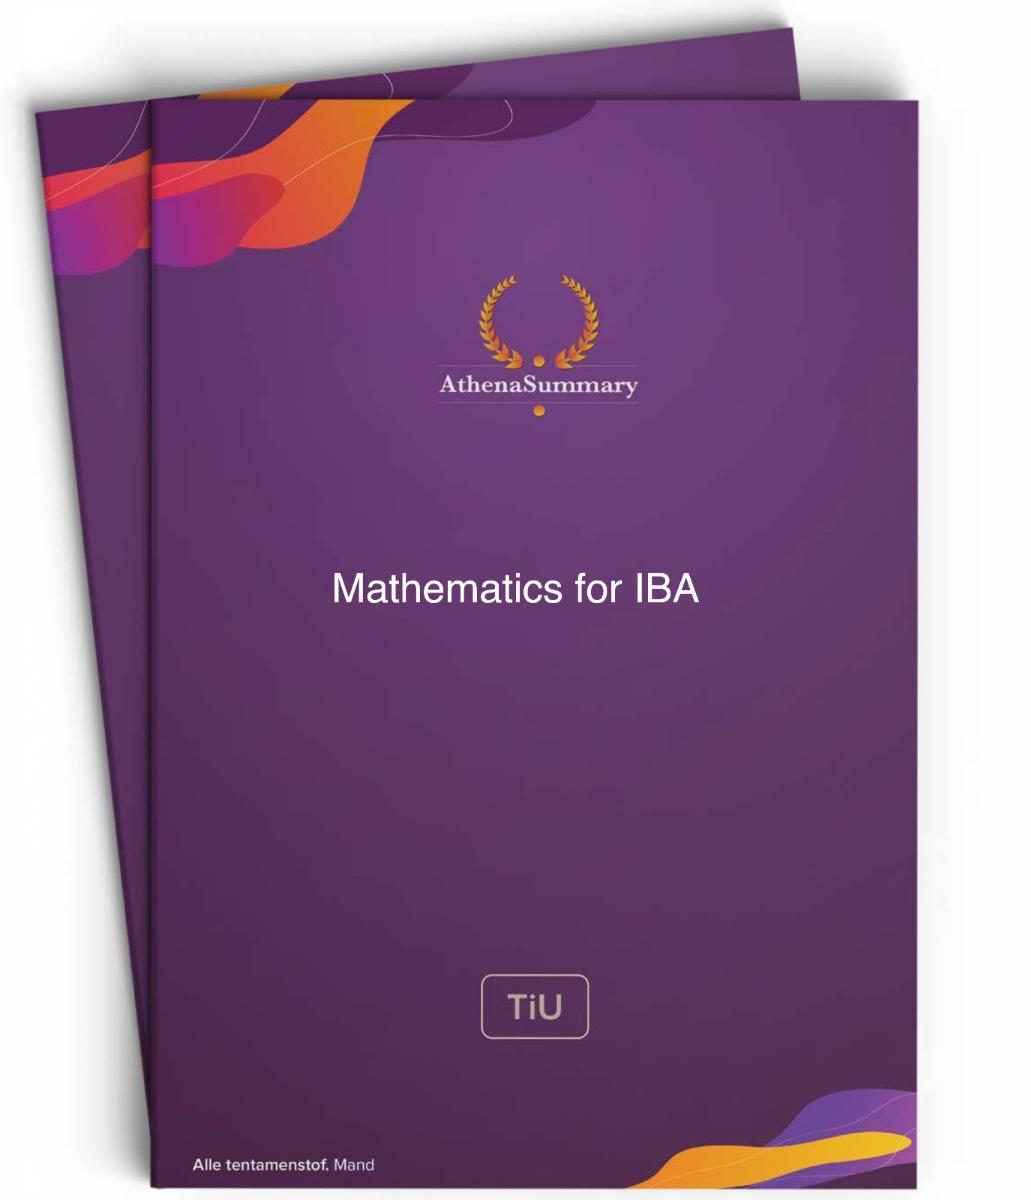 Literature Summary: Mathematics for IBA